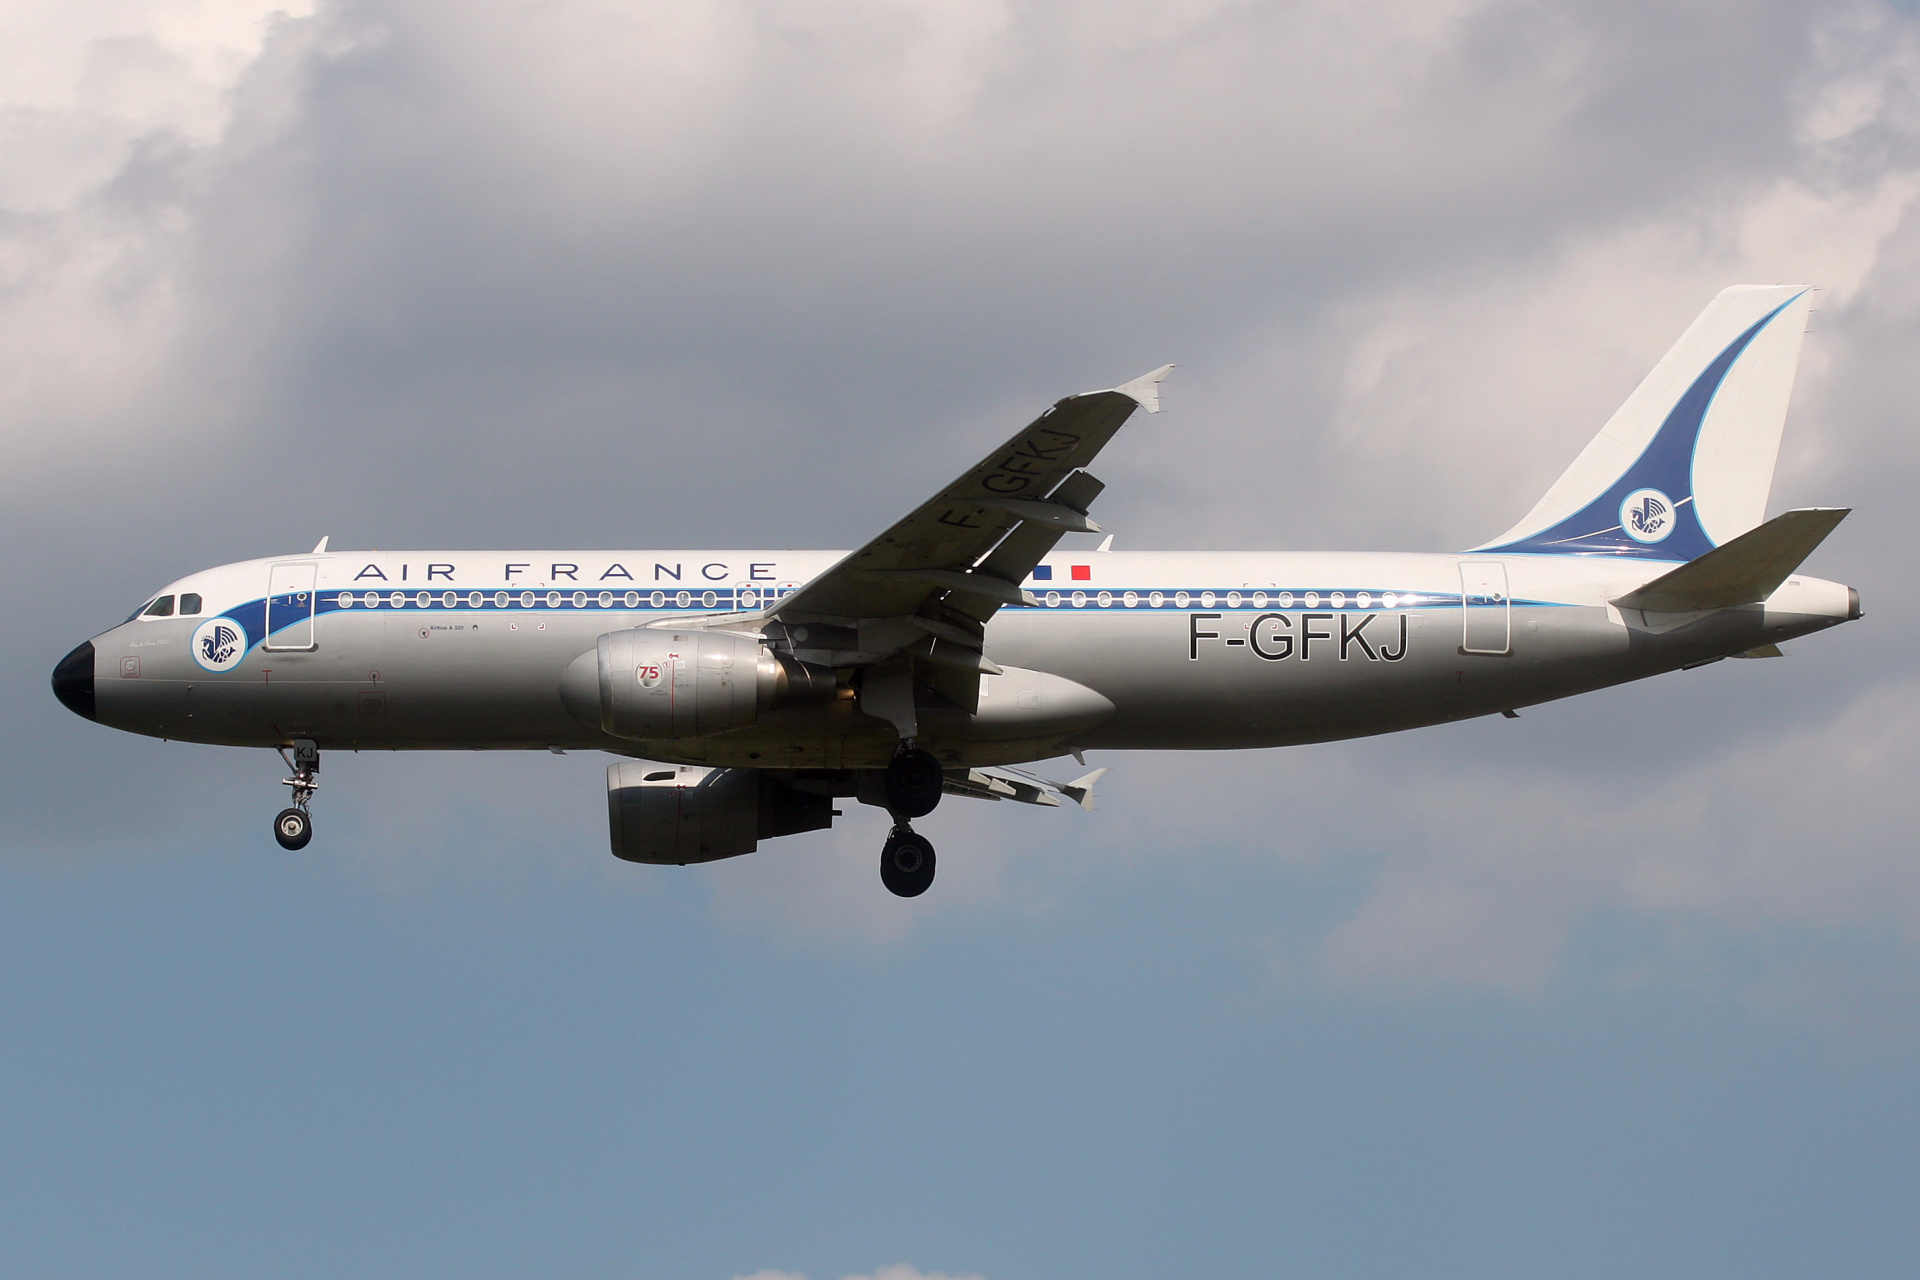 F-GFKJ (retro livery) (Aircraft » EPWA Spotting » Airbus A320-200 » Air France)